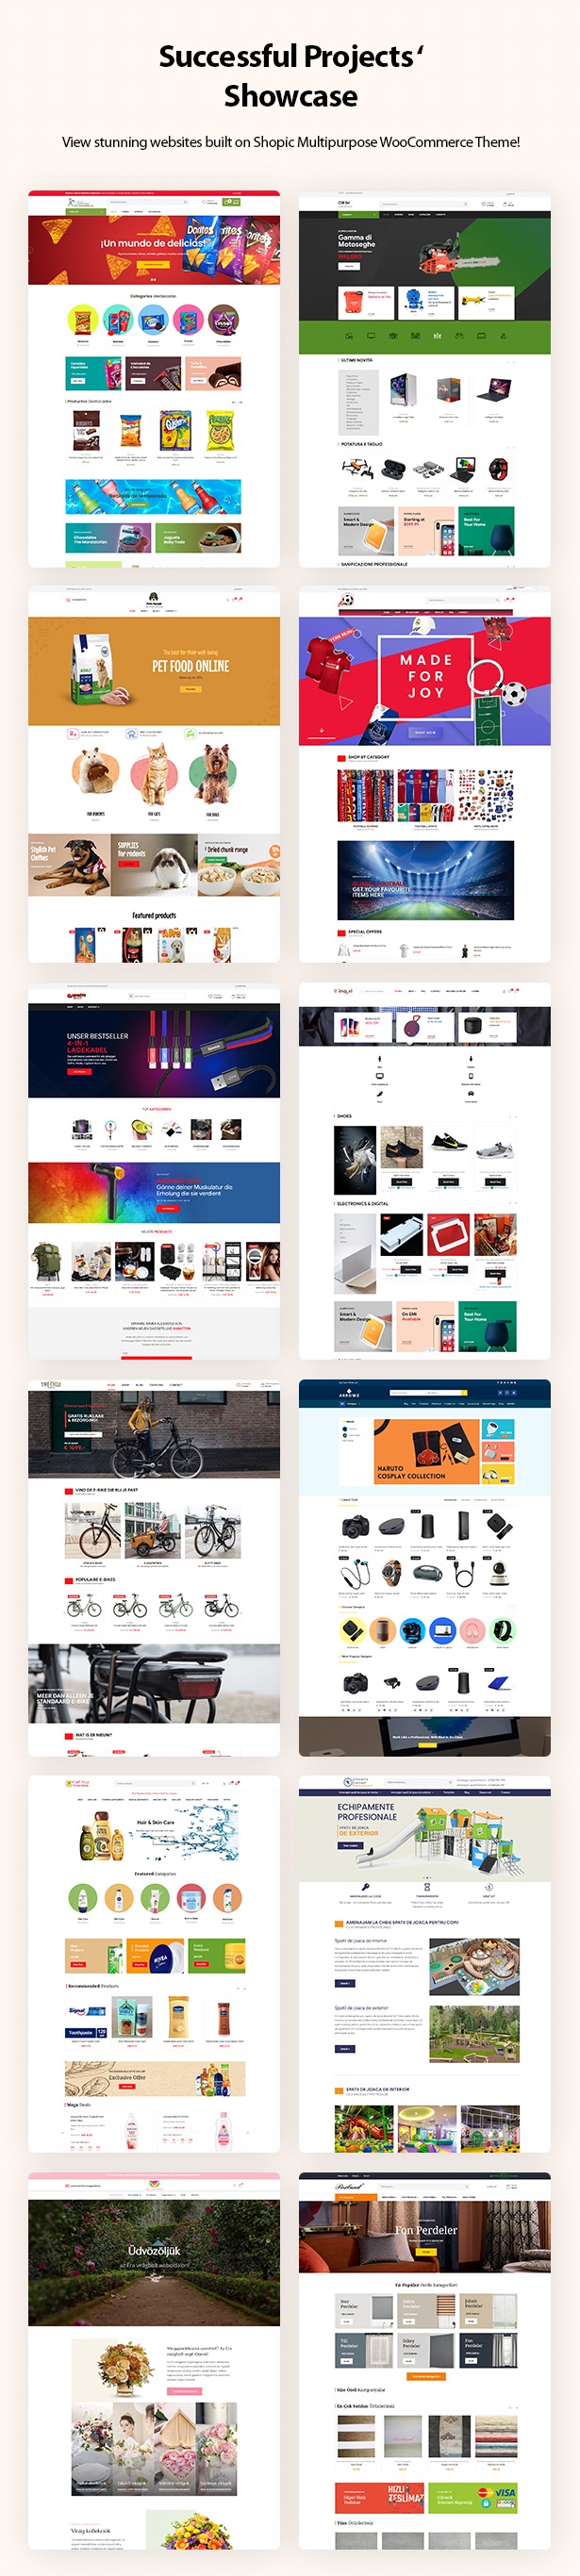 Shopic - 多合一电子商务企业网站WordPress模板